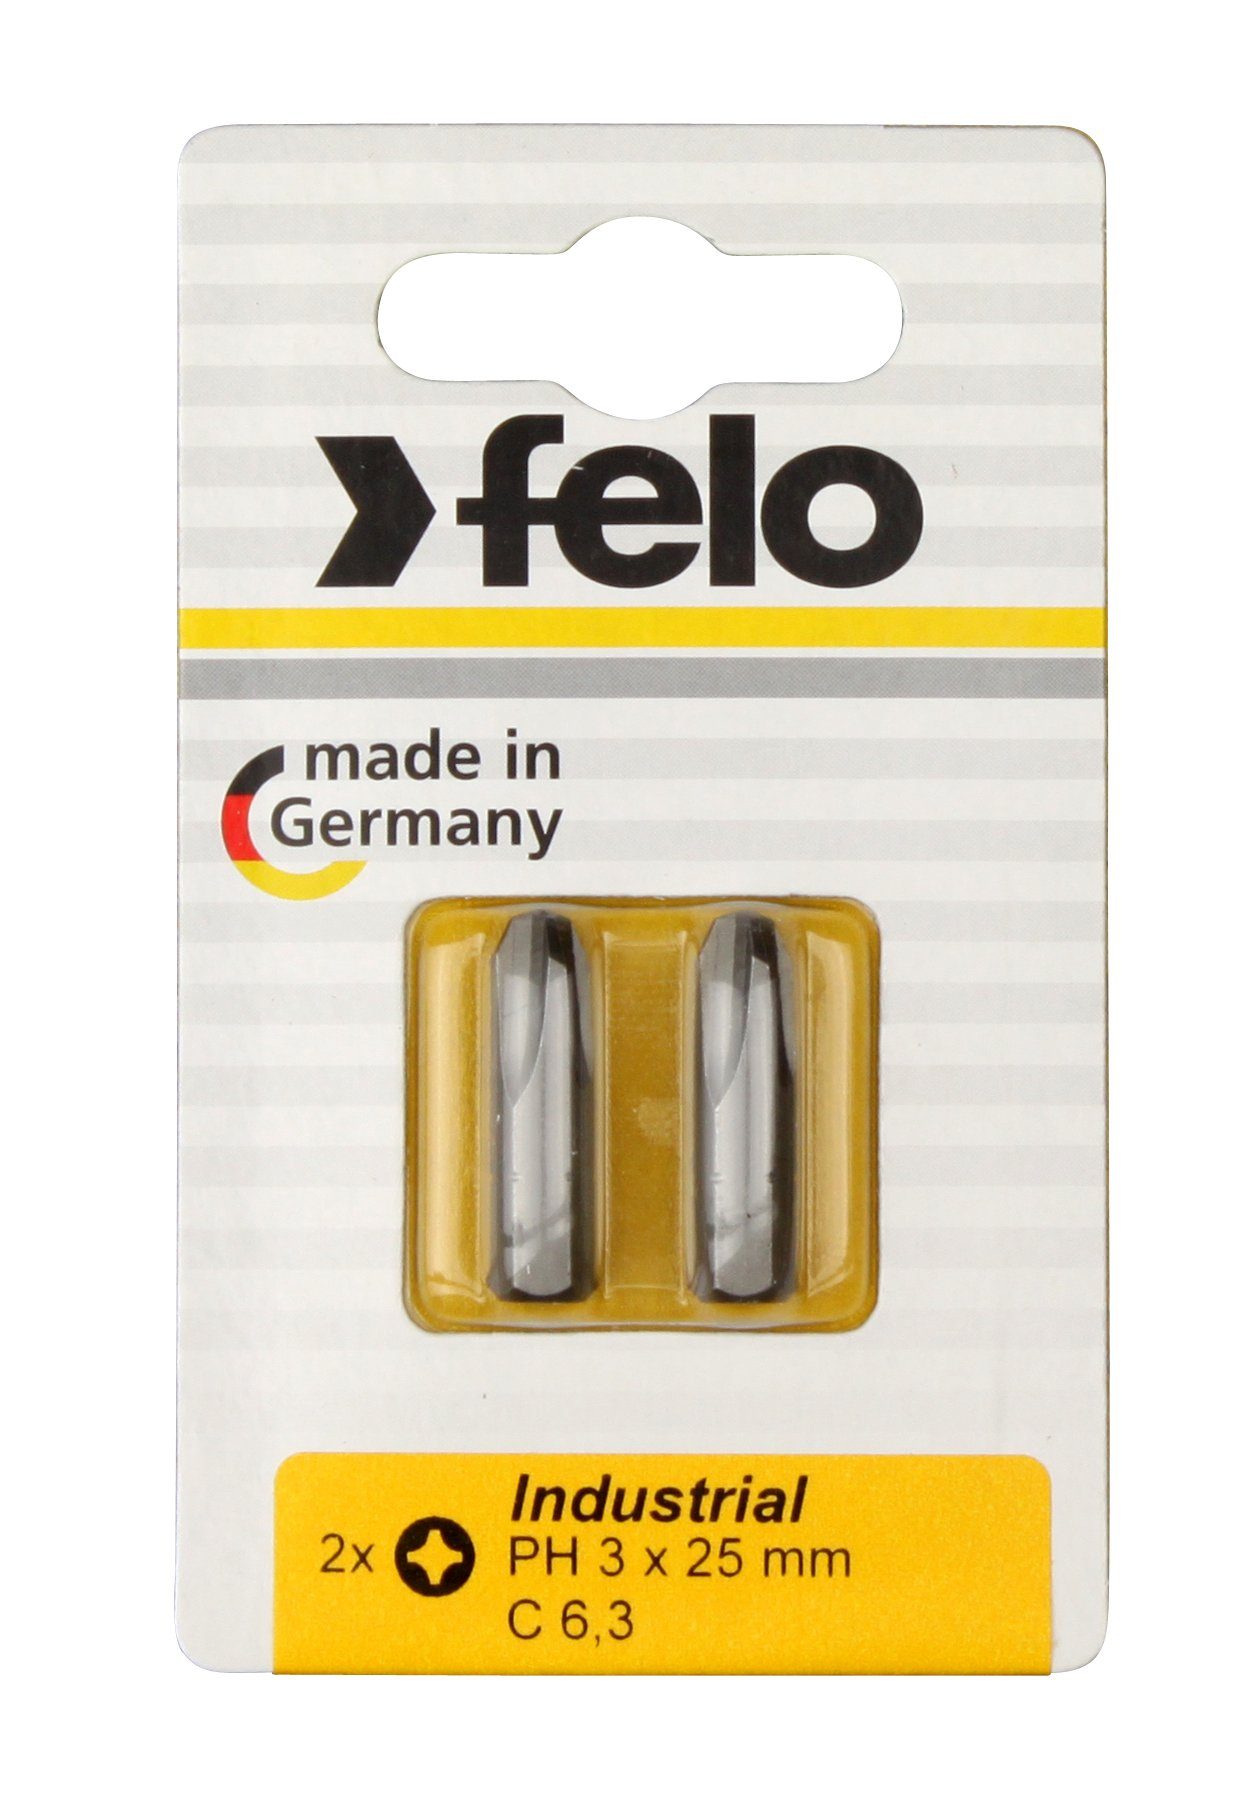 Felo Kreuzschlitz-Bit Felo Bit, Industrie C 6,3 x 25mm, 2 Stk auf Karte 2x PH 3